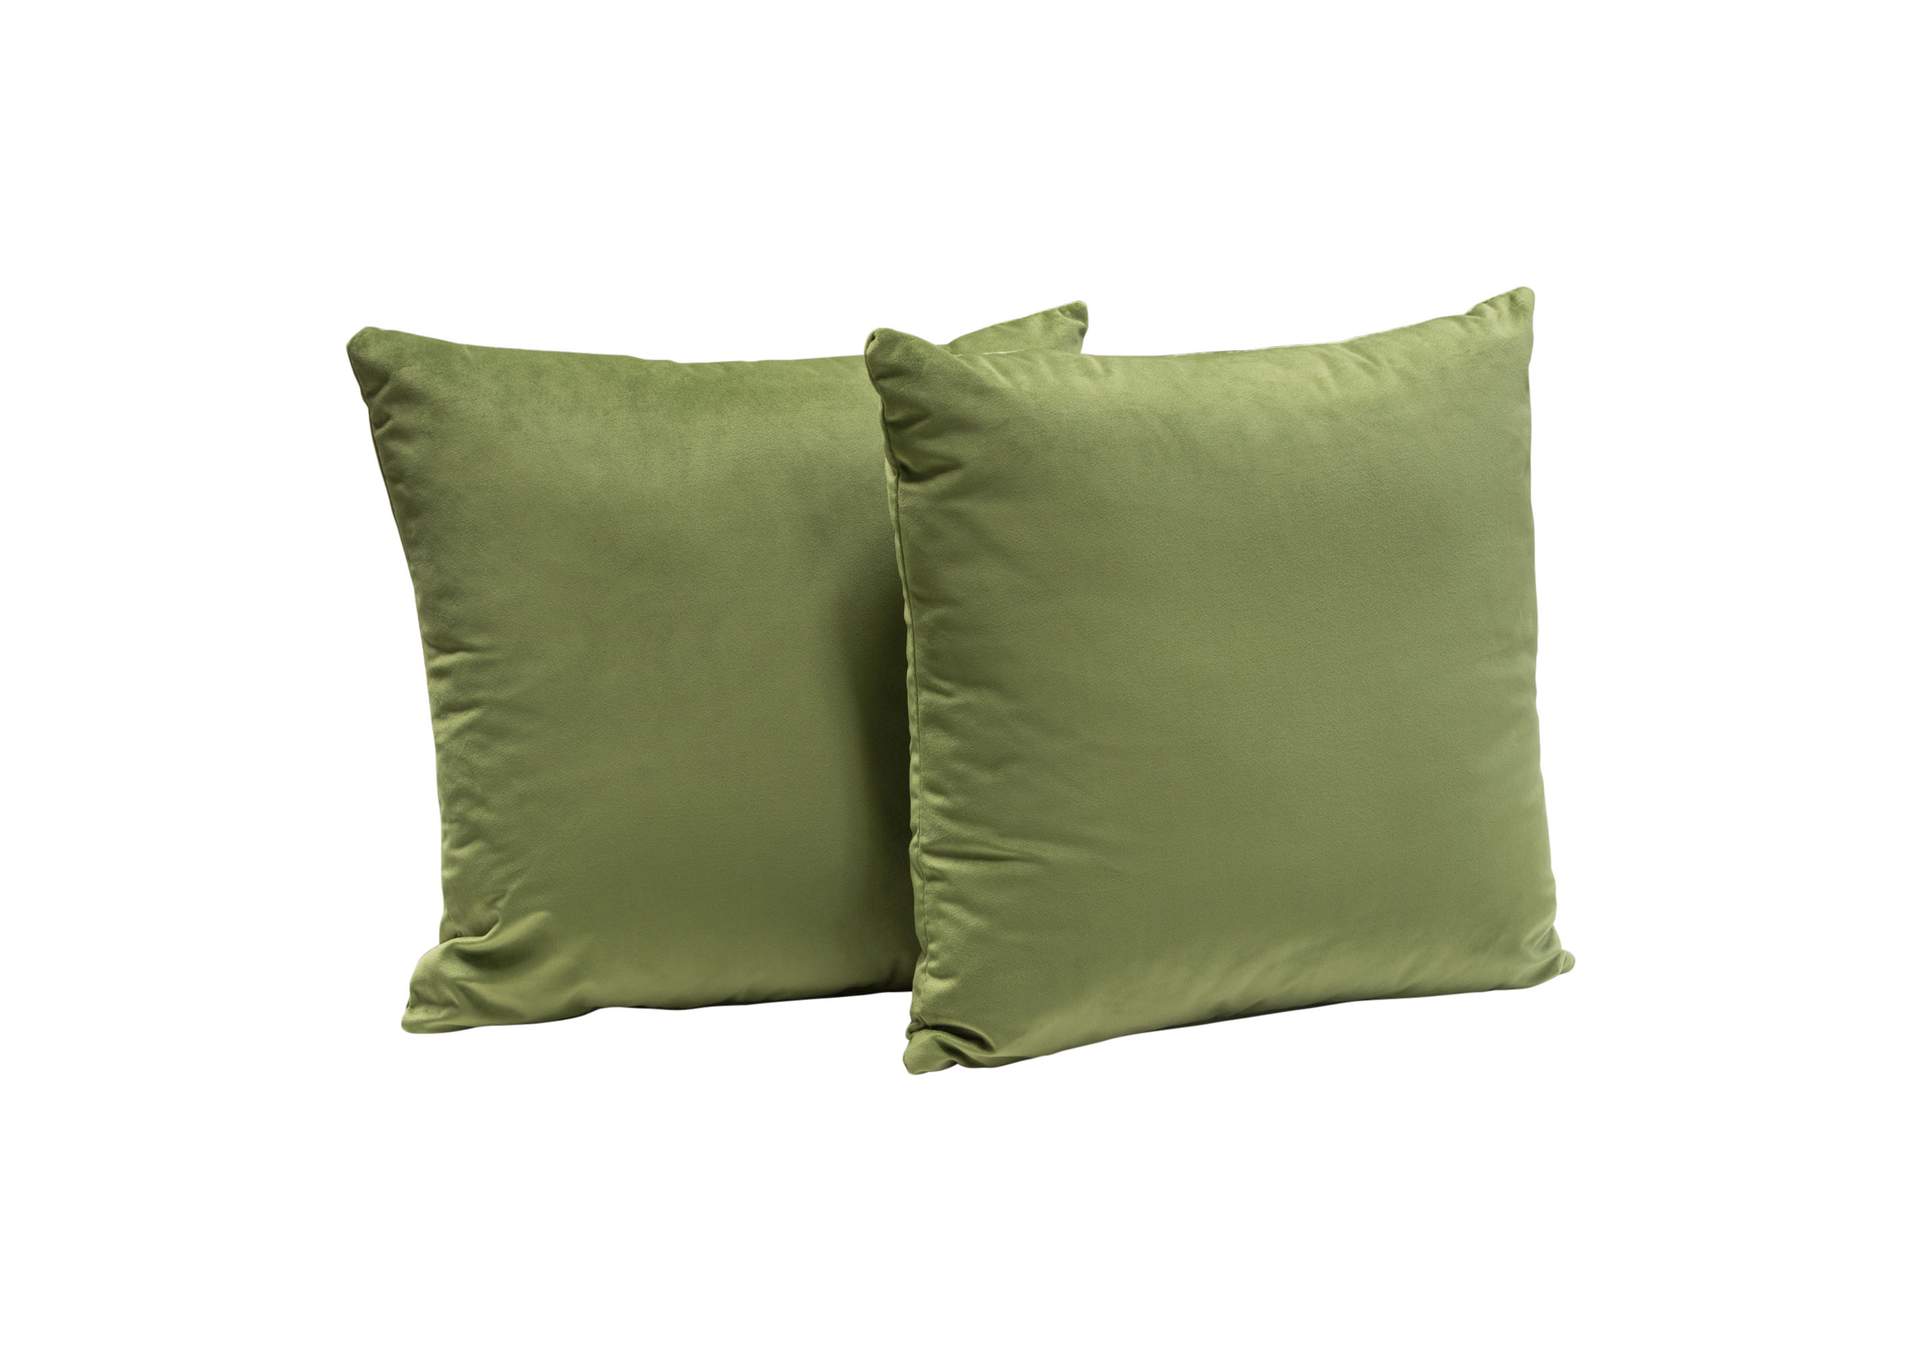 Set of (2) 16" Square Accent Pillows in Sage Green Velvet by Diamond Sofa,Diamond Sofa